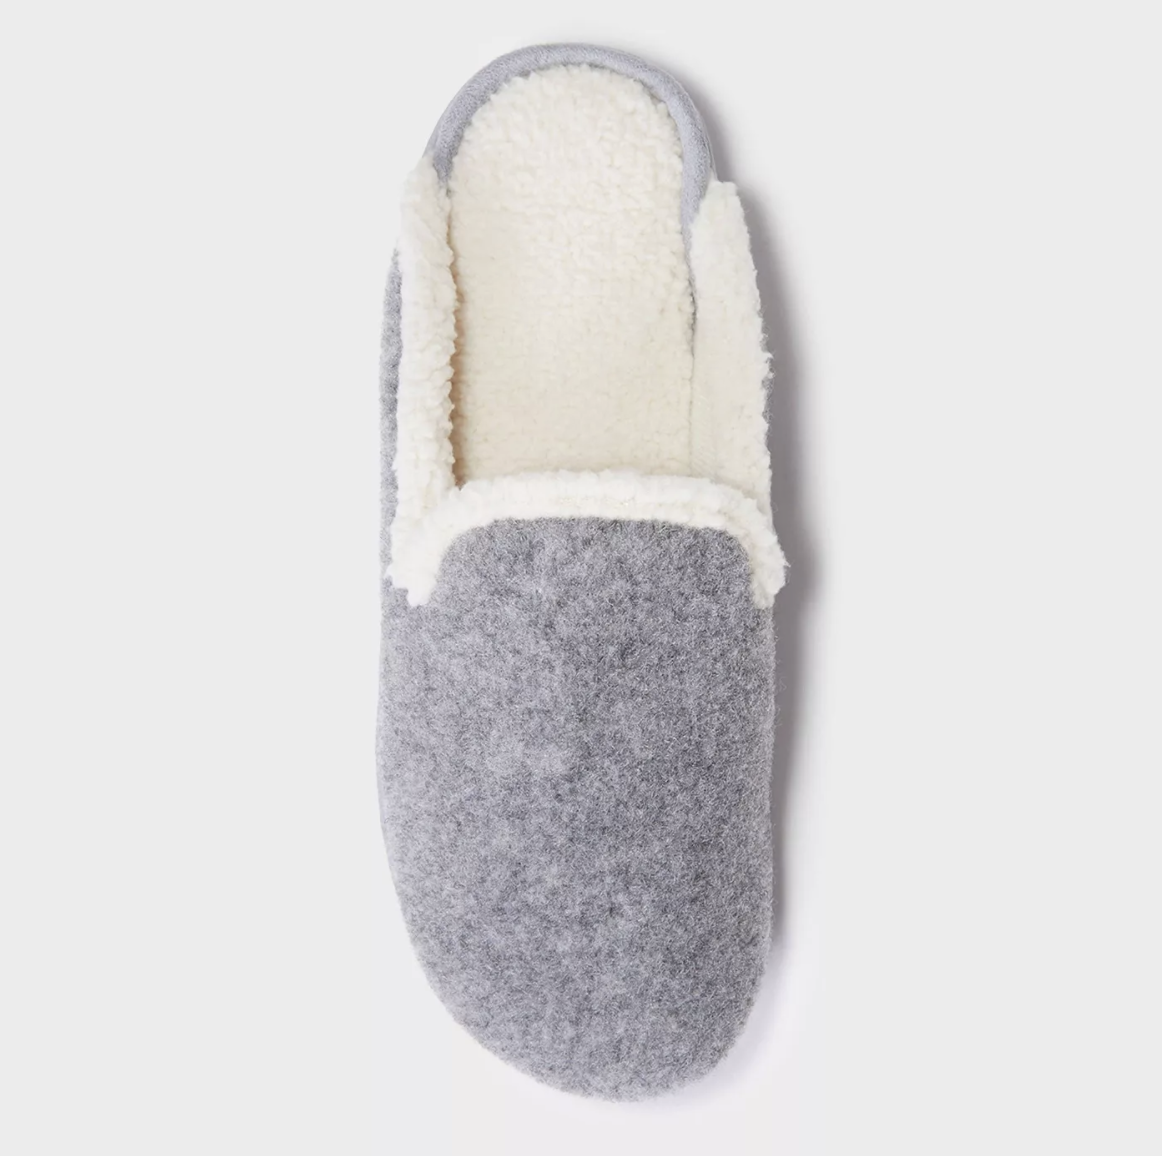 bedroom slippers target